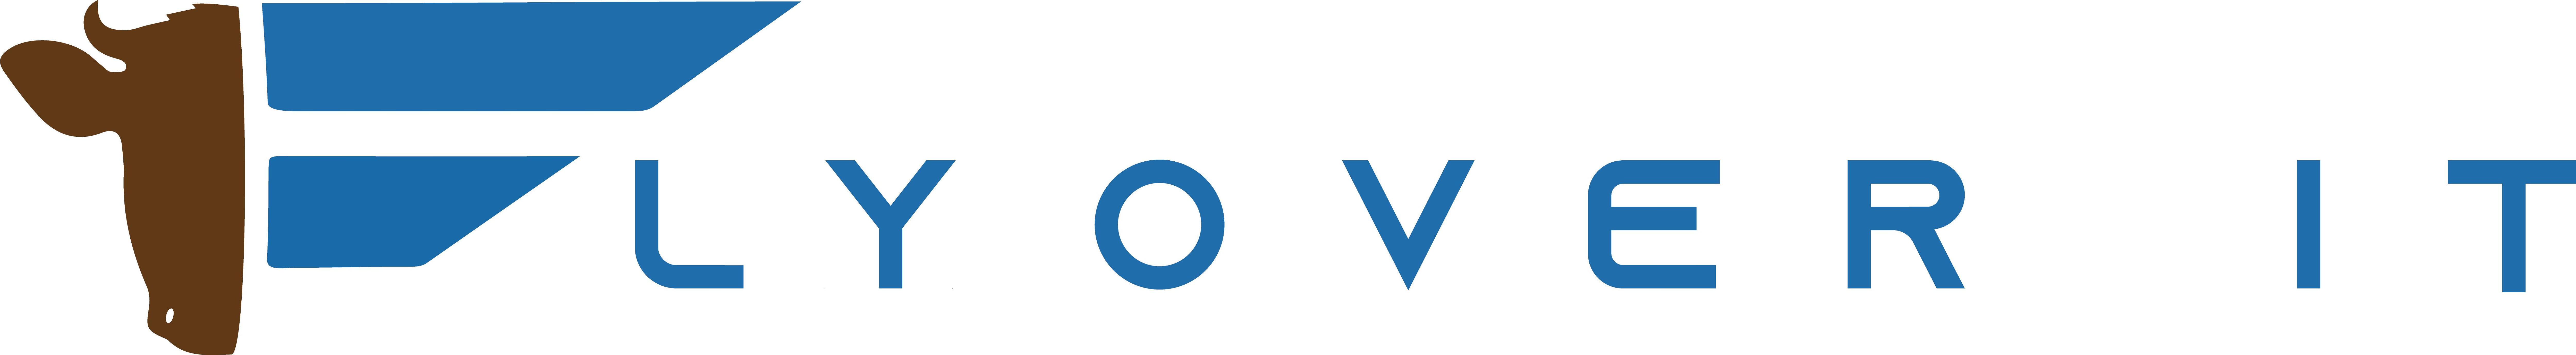 FlyOver IT LLC Logo